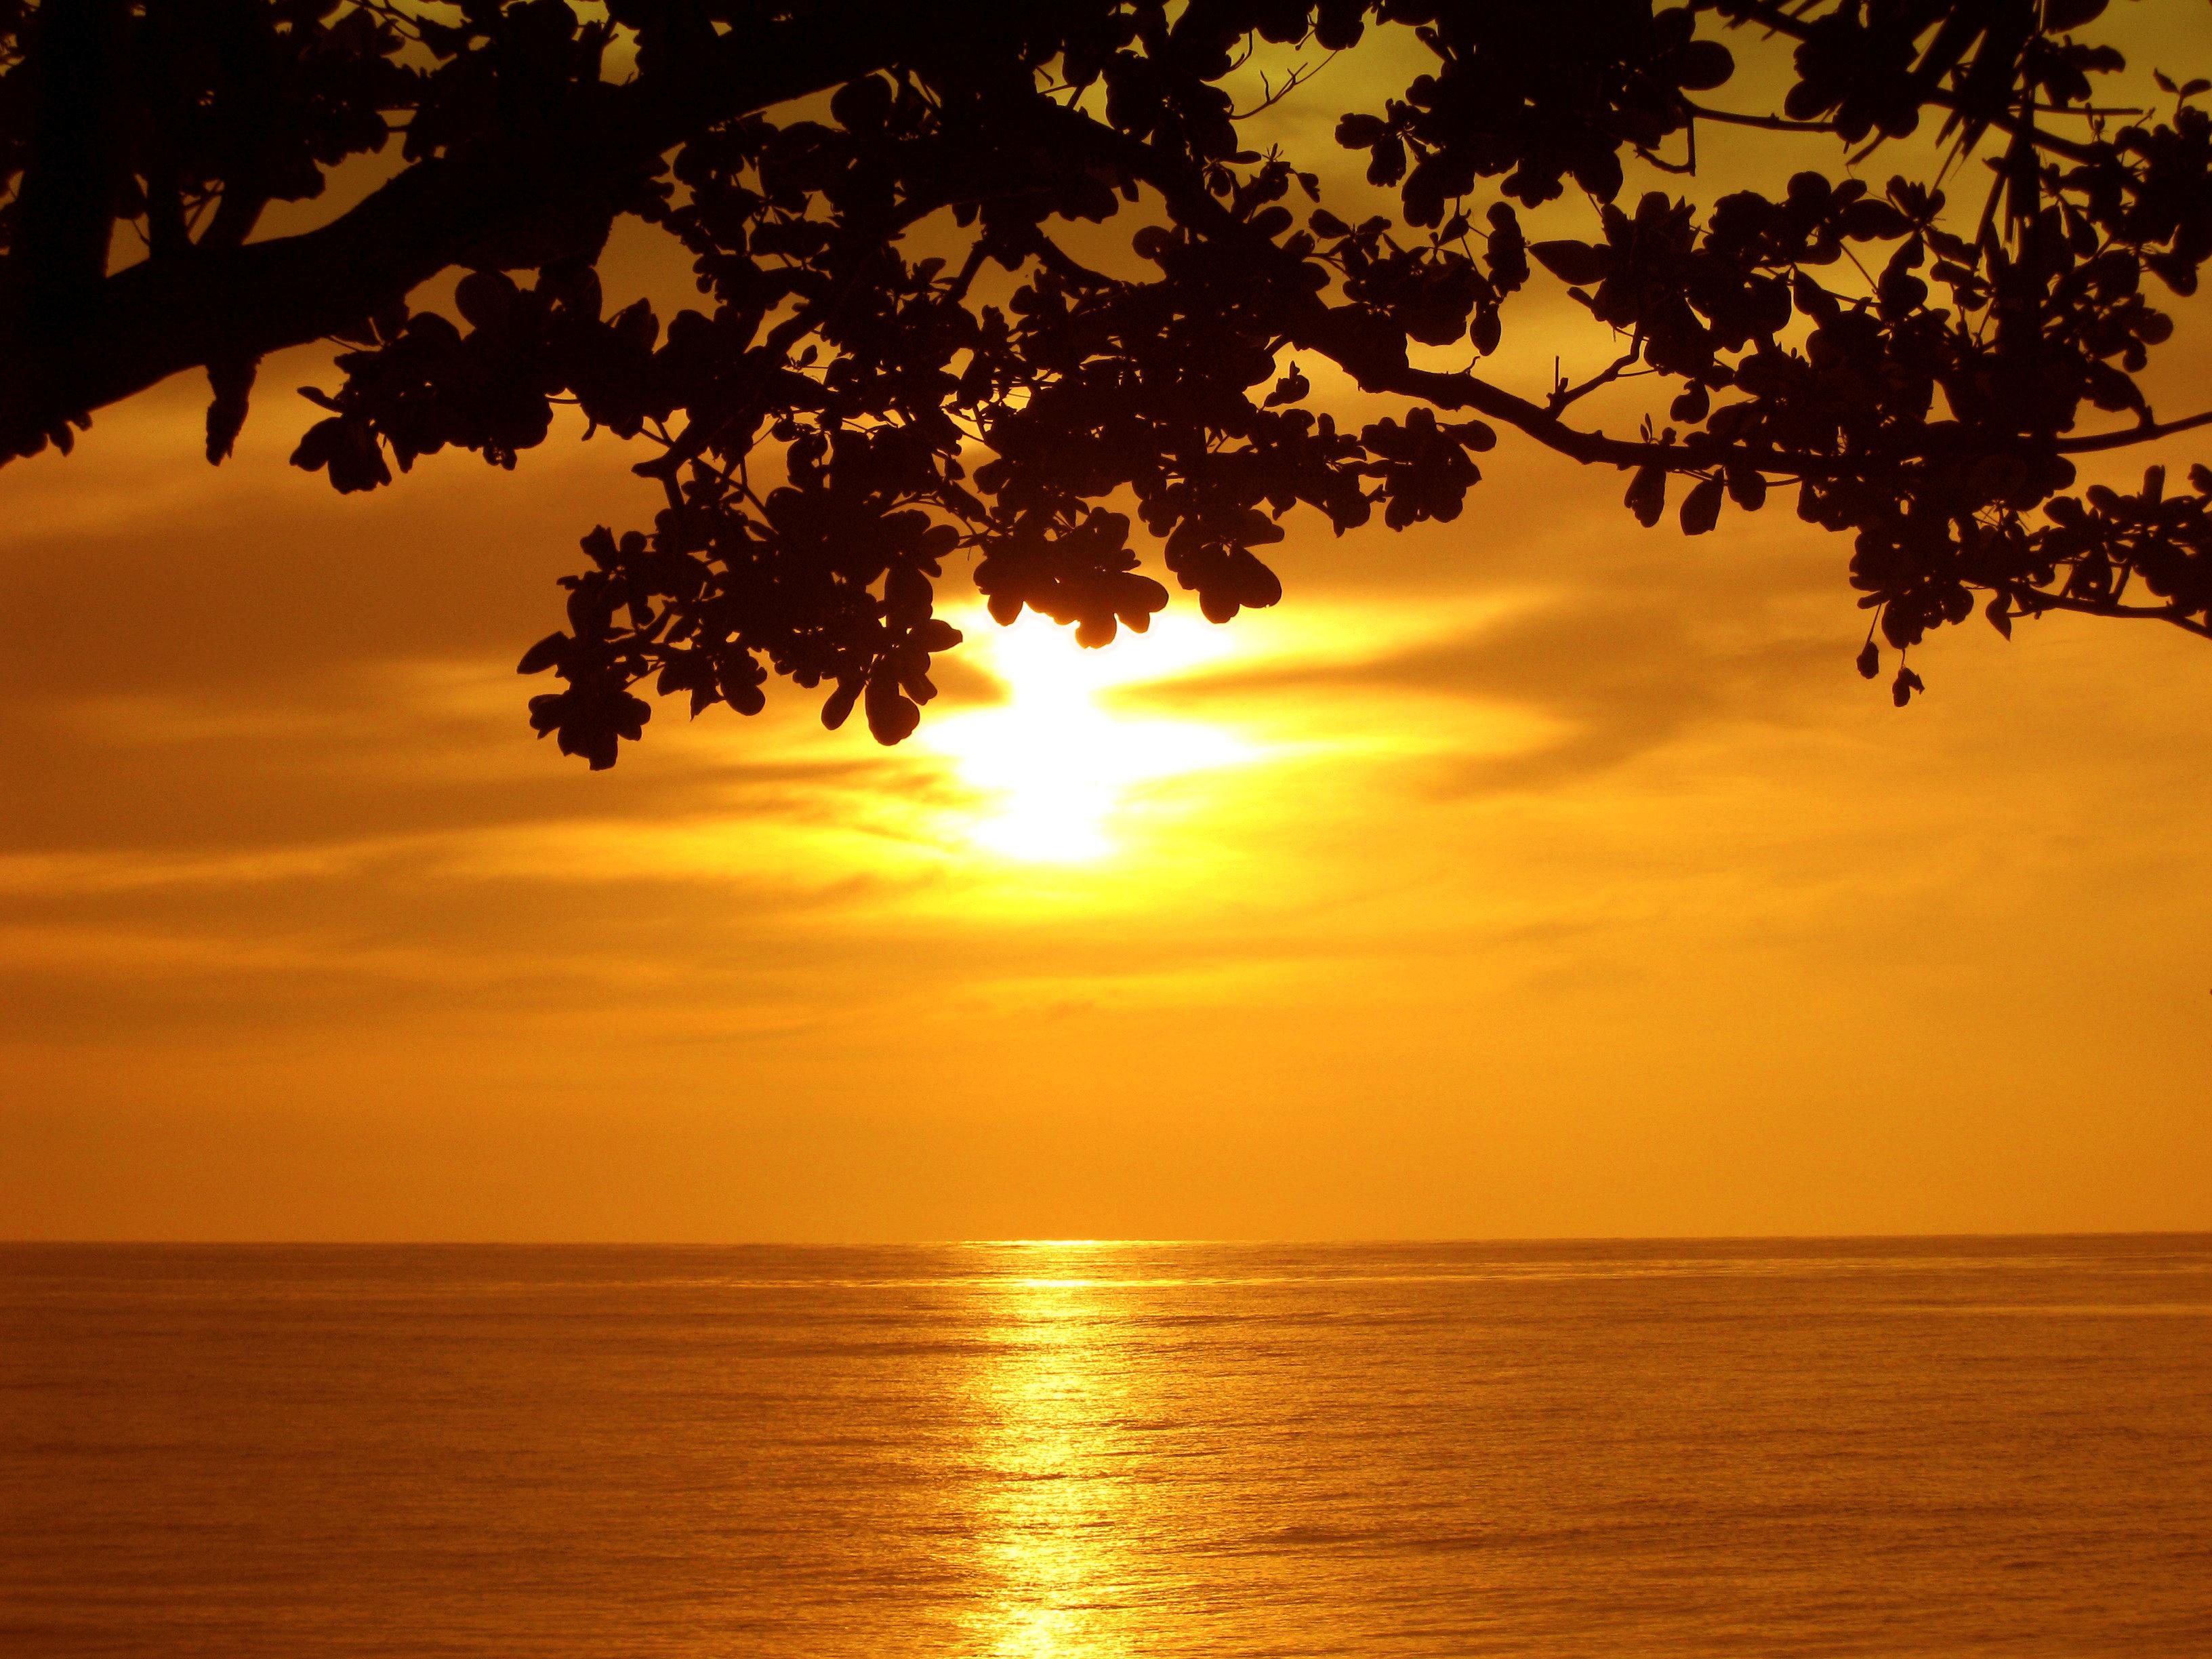 Philippine sunset